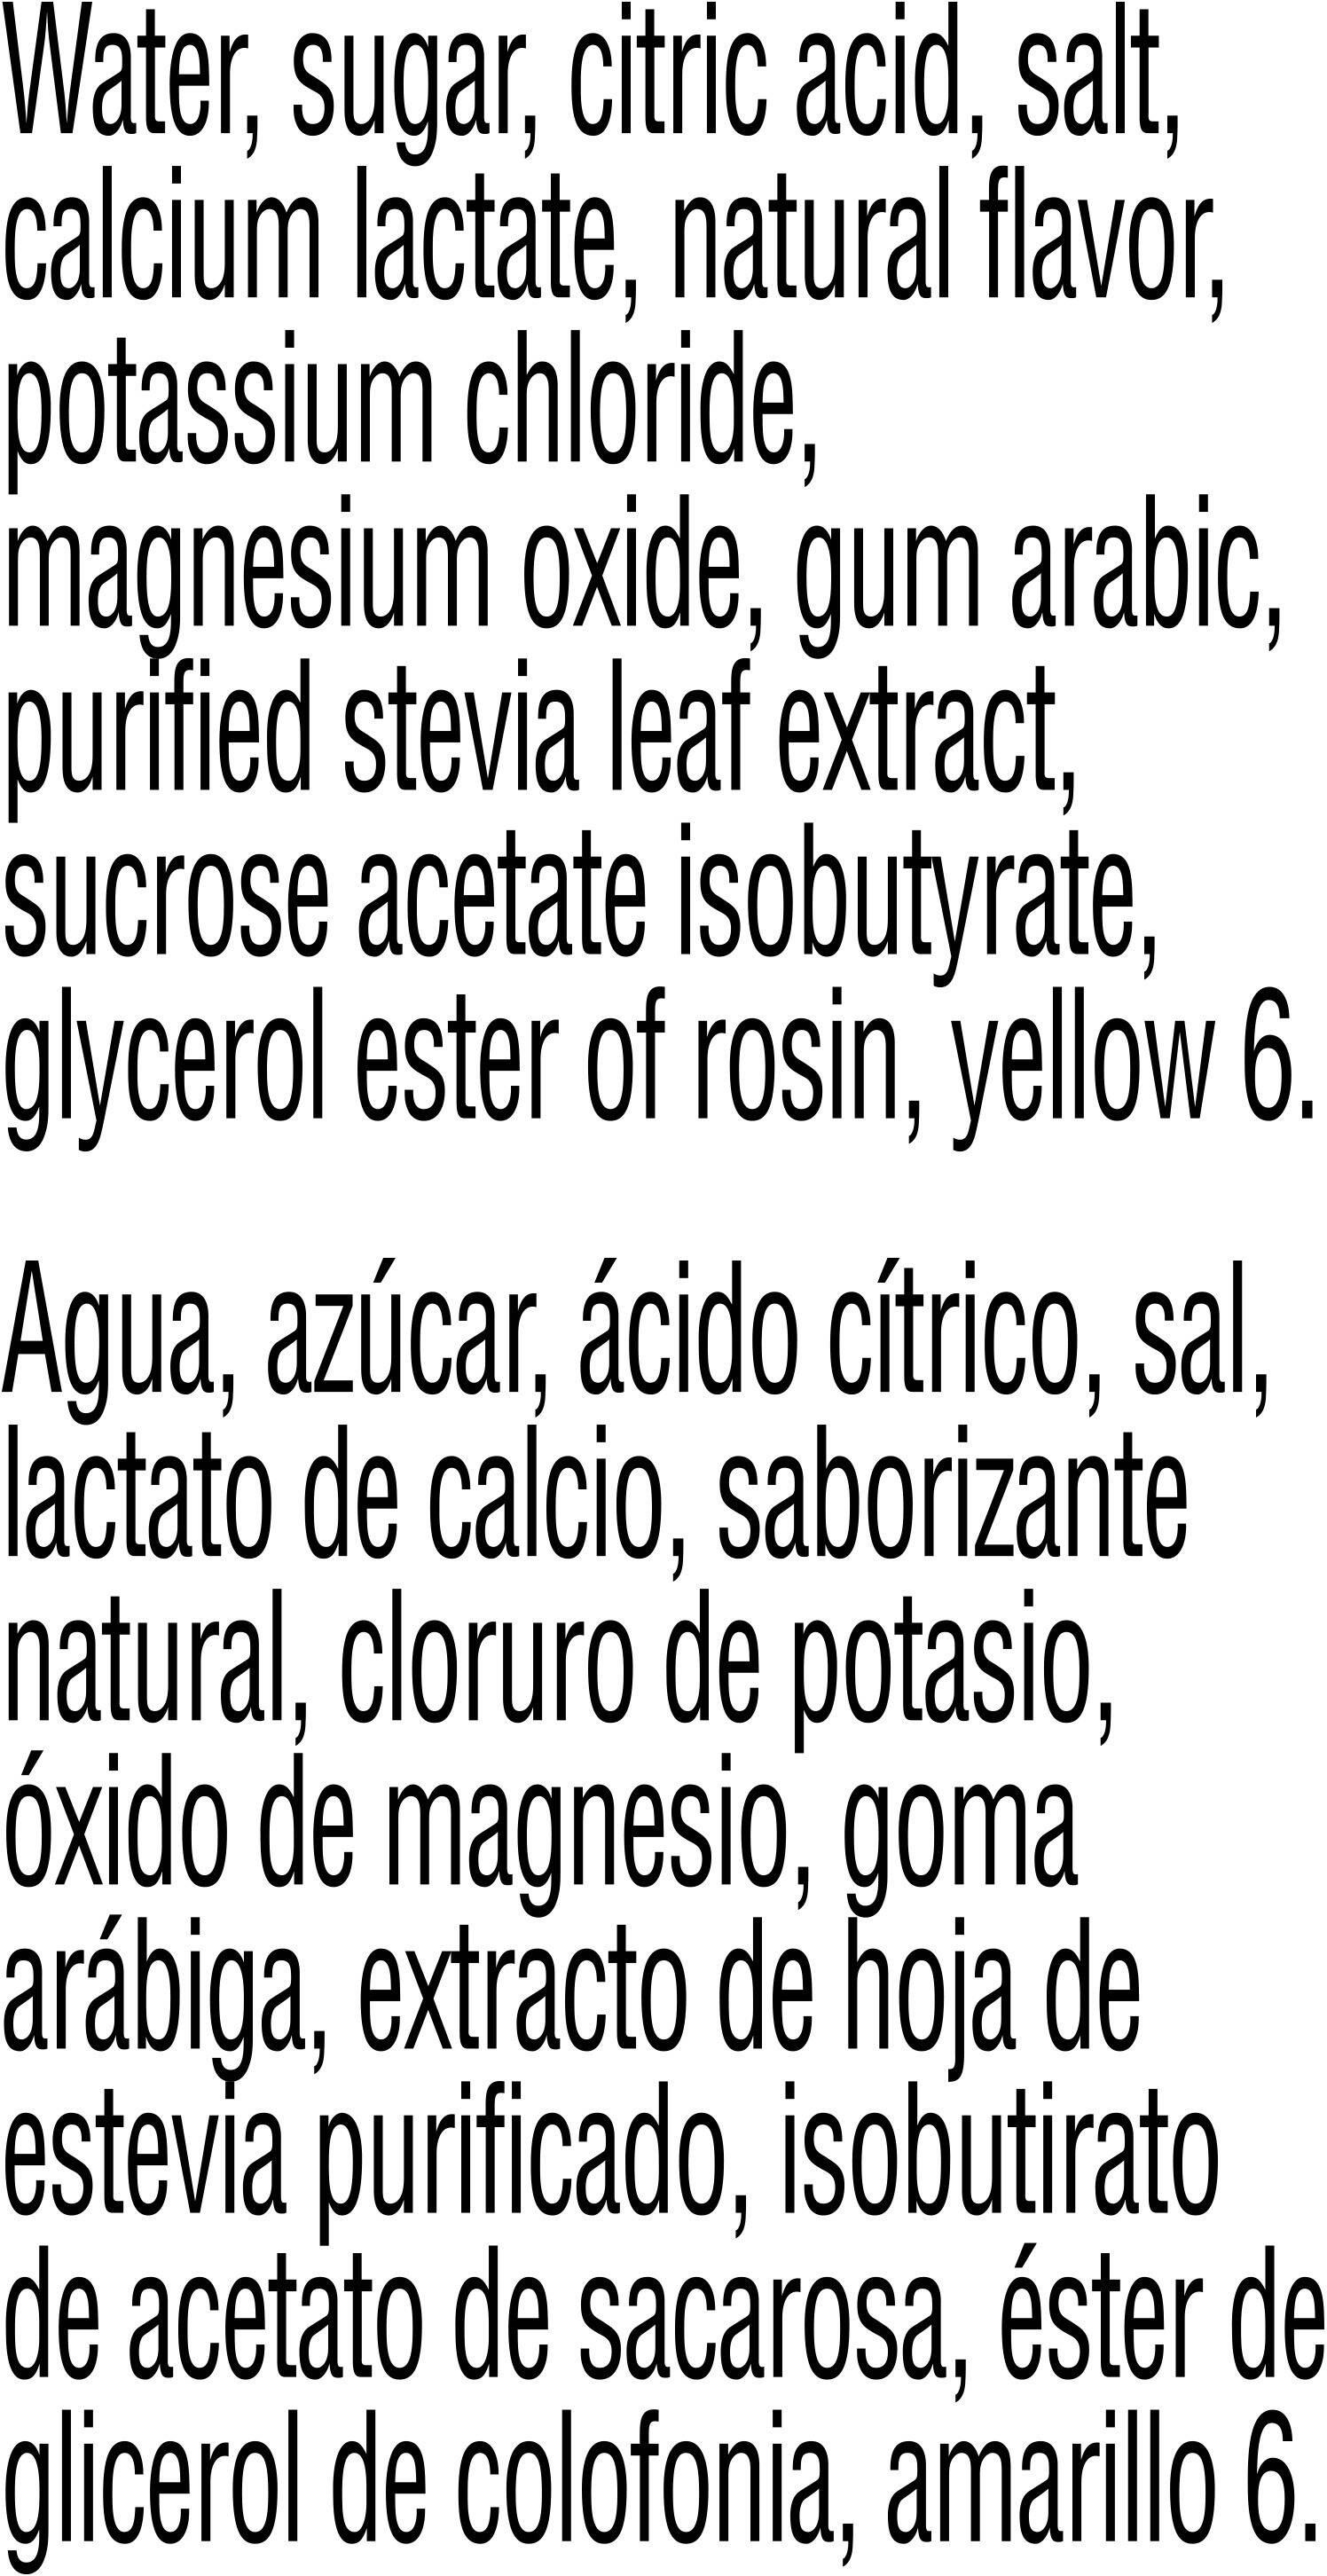 Image describing nutrition information for product Gatorade Gatorlyte Orange